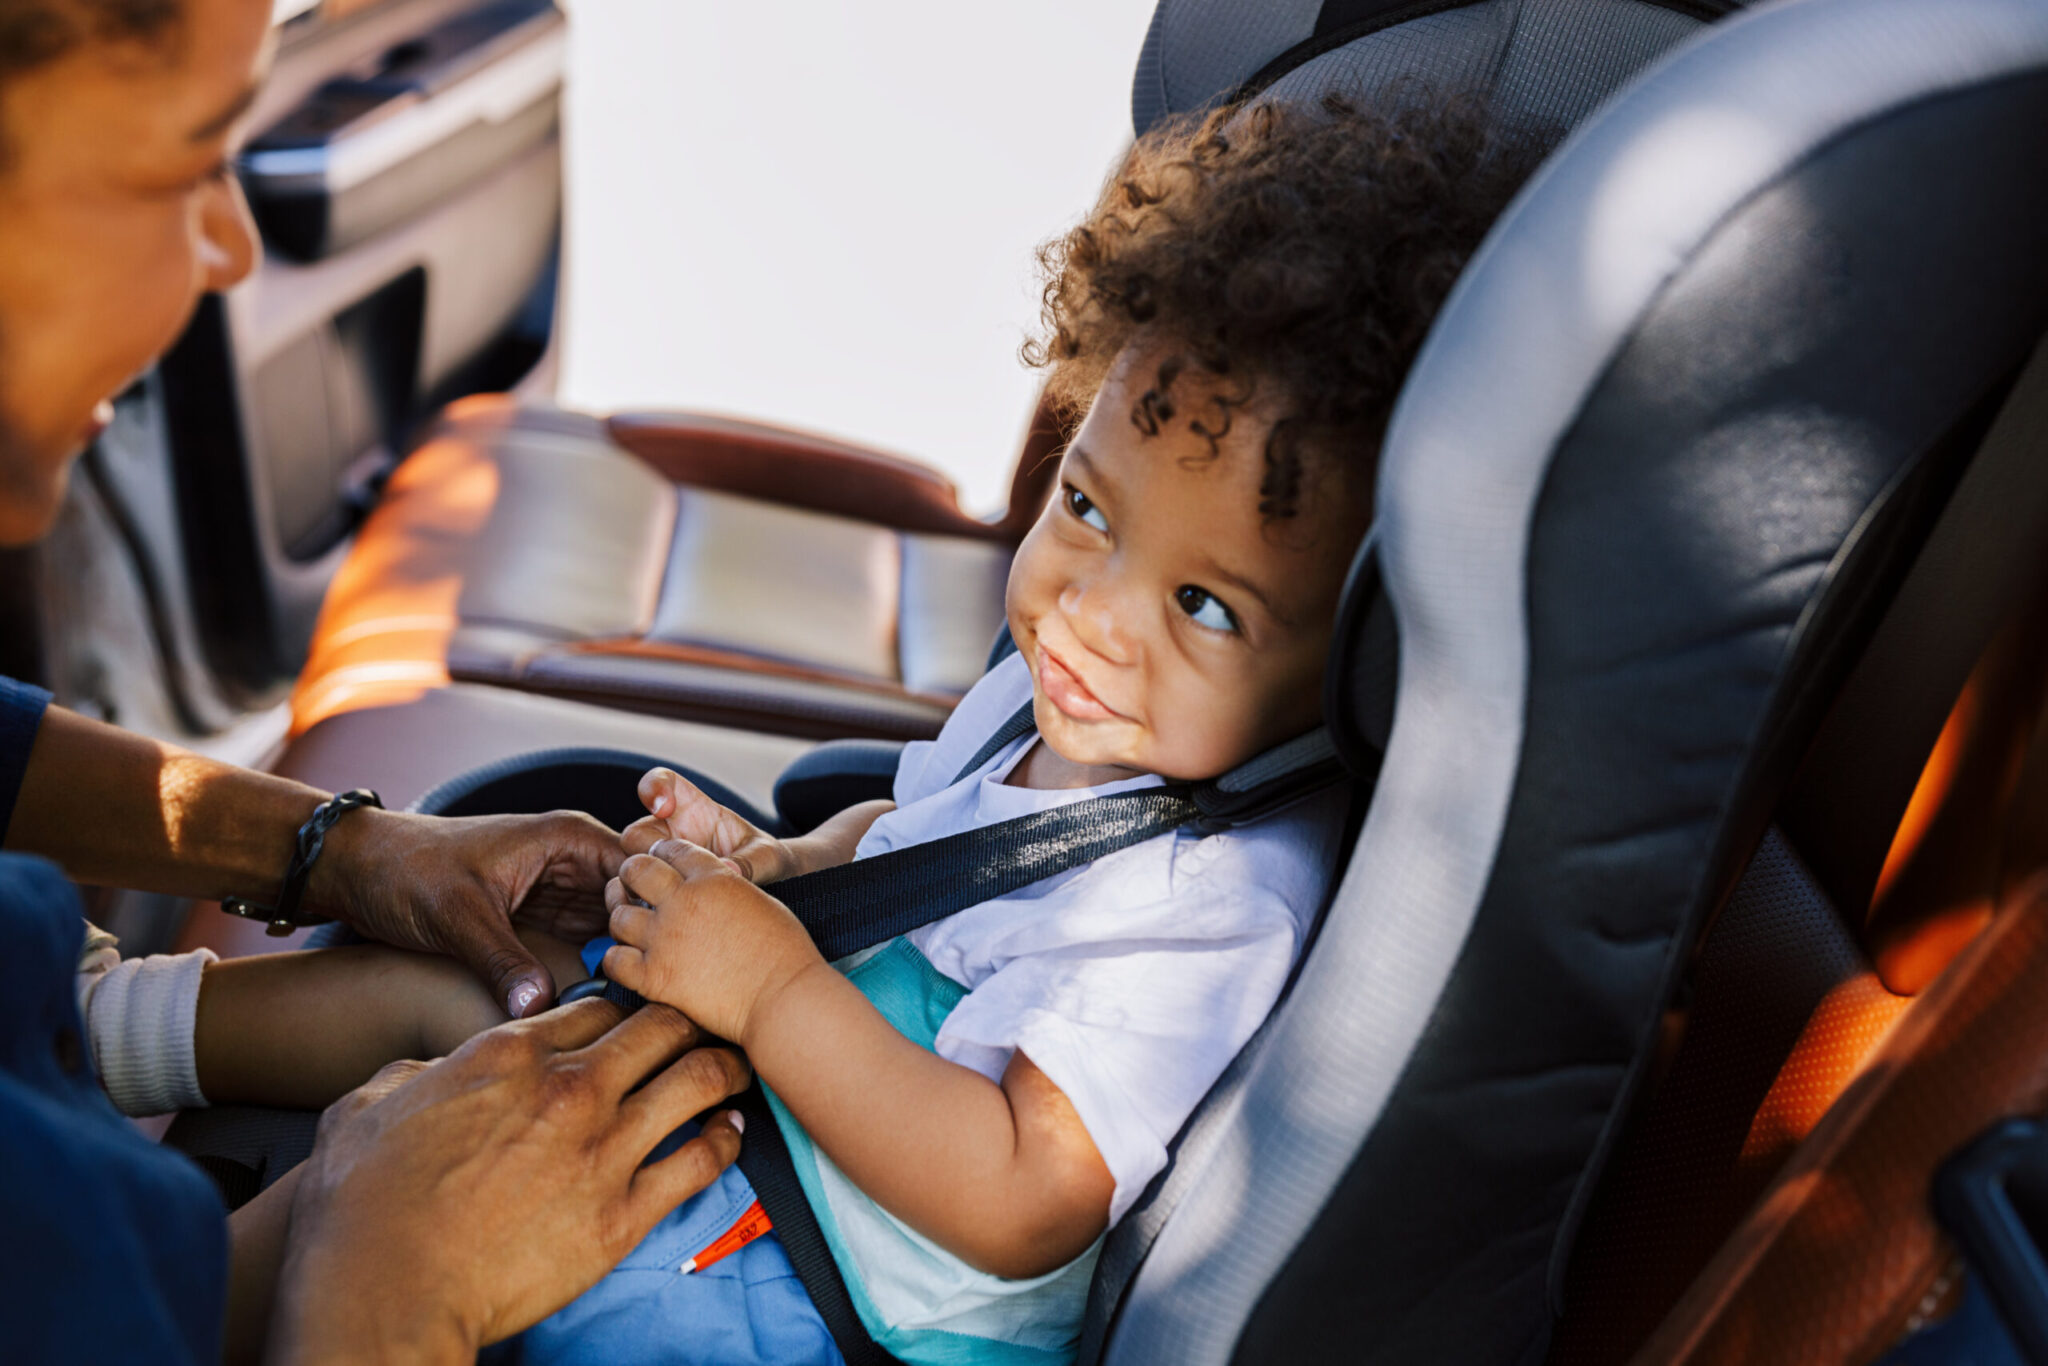 Child Passenger Safety Week Tips for Parents Signing Time